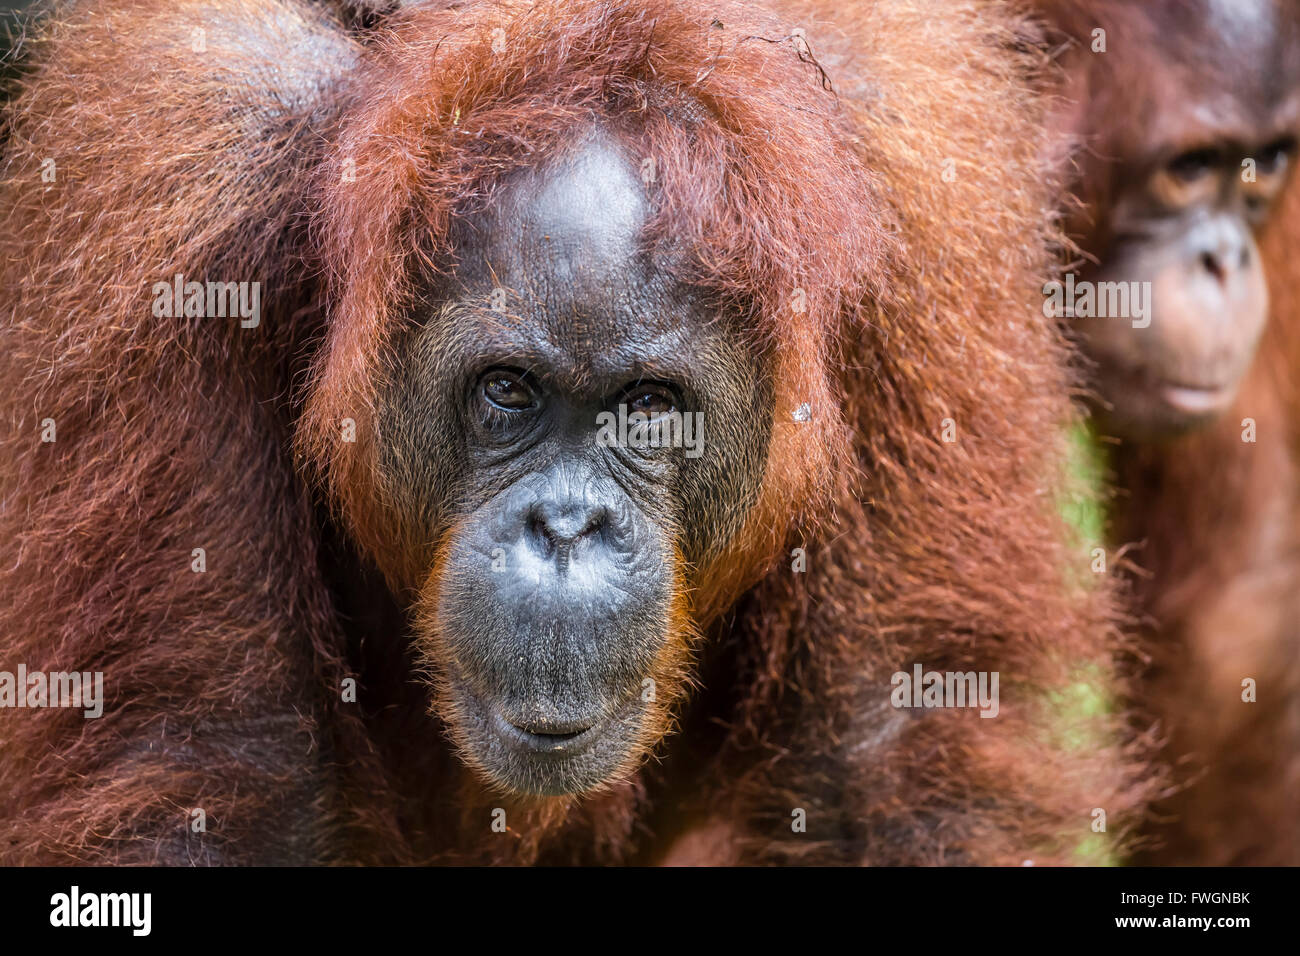 Mother and infant Bornean orangutan (Pongo pygmaeus), Semenggoh Rehabilitation Center, Sarawak, Borneo, Malaysia, Asia Stock Photo